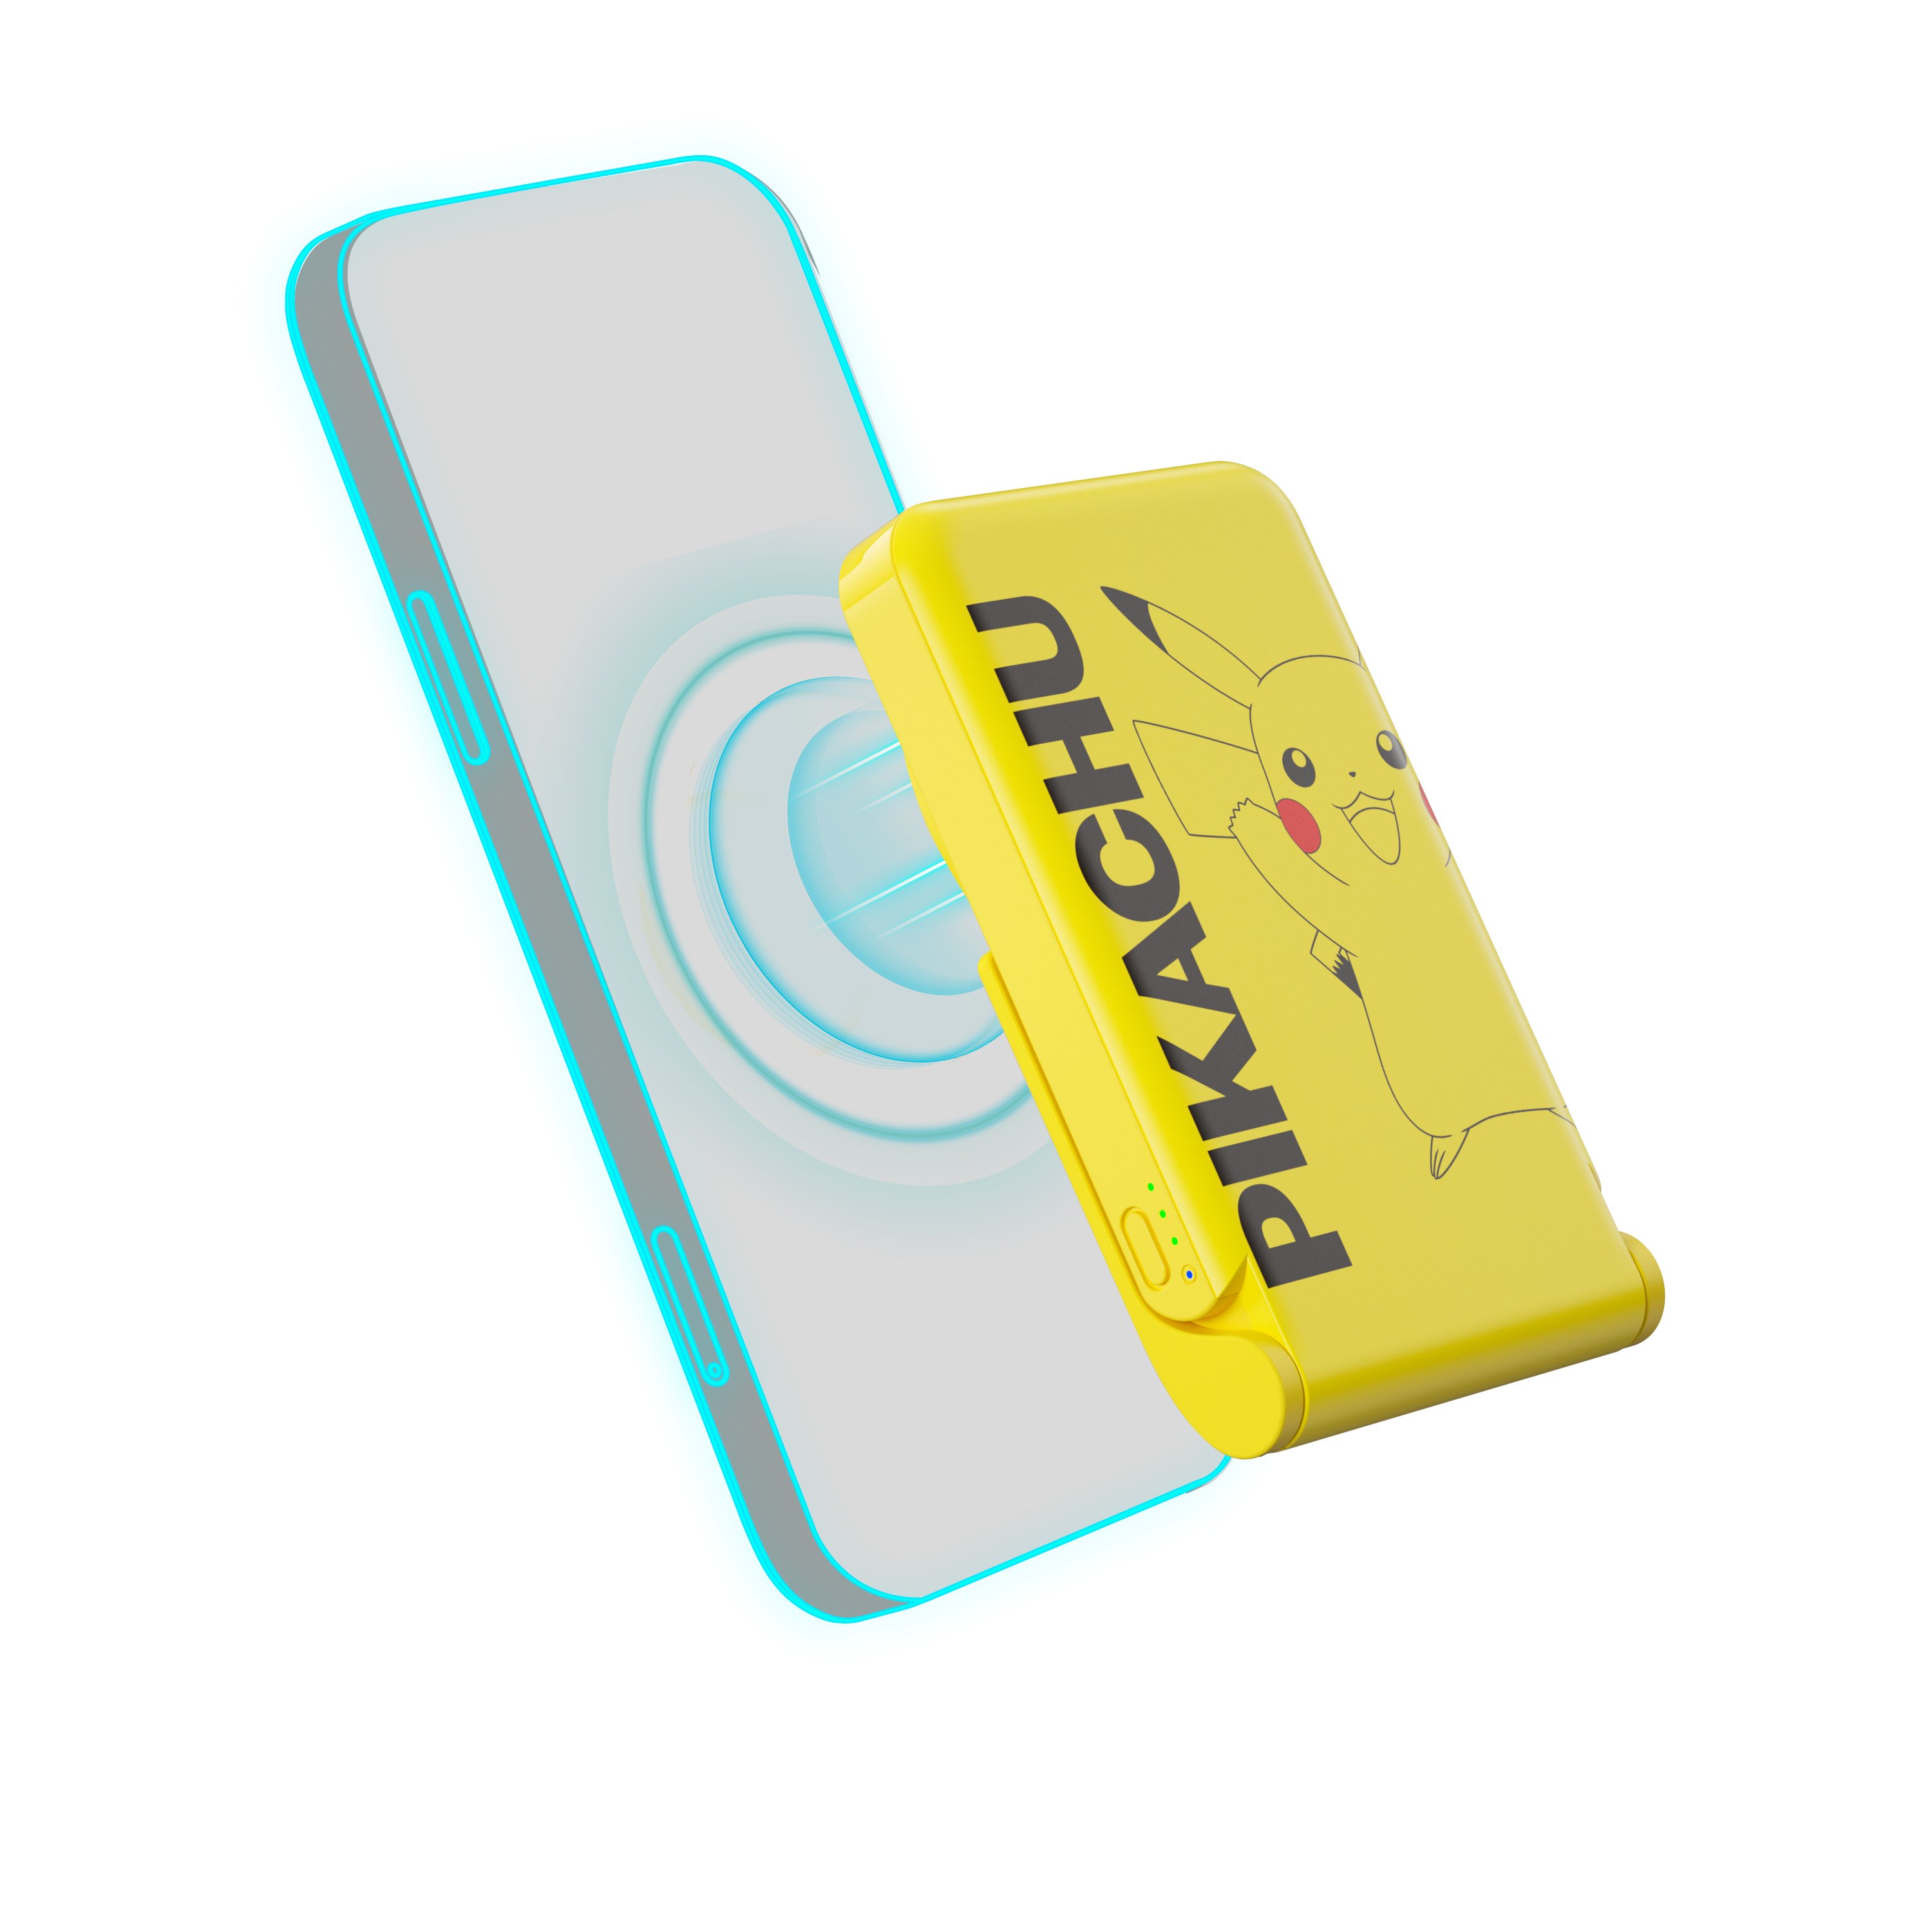 OTL - Pokemon Pikachu wireless magnetic power bank - Gadgets